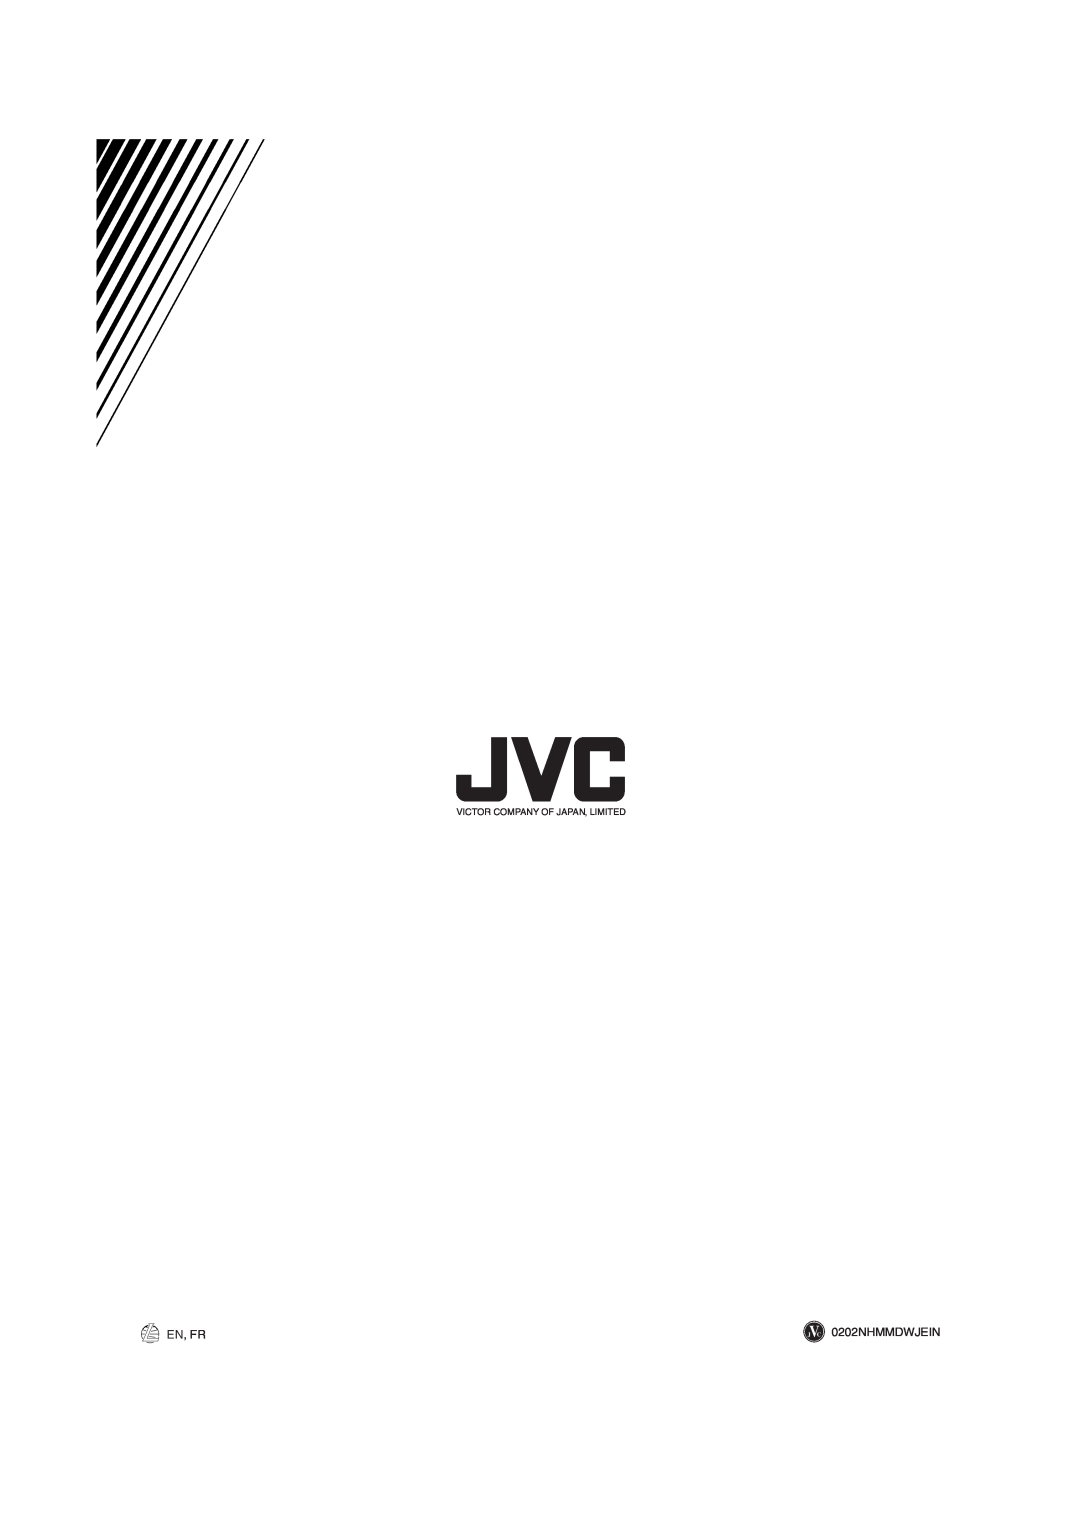 JVC RX-7520VBK manual En, Fr, J C 0202NHMMDWJEIN, Victor Company Of Japan, Limited 